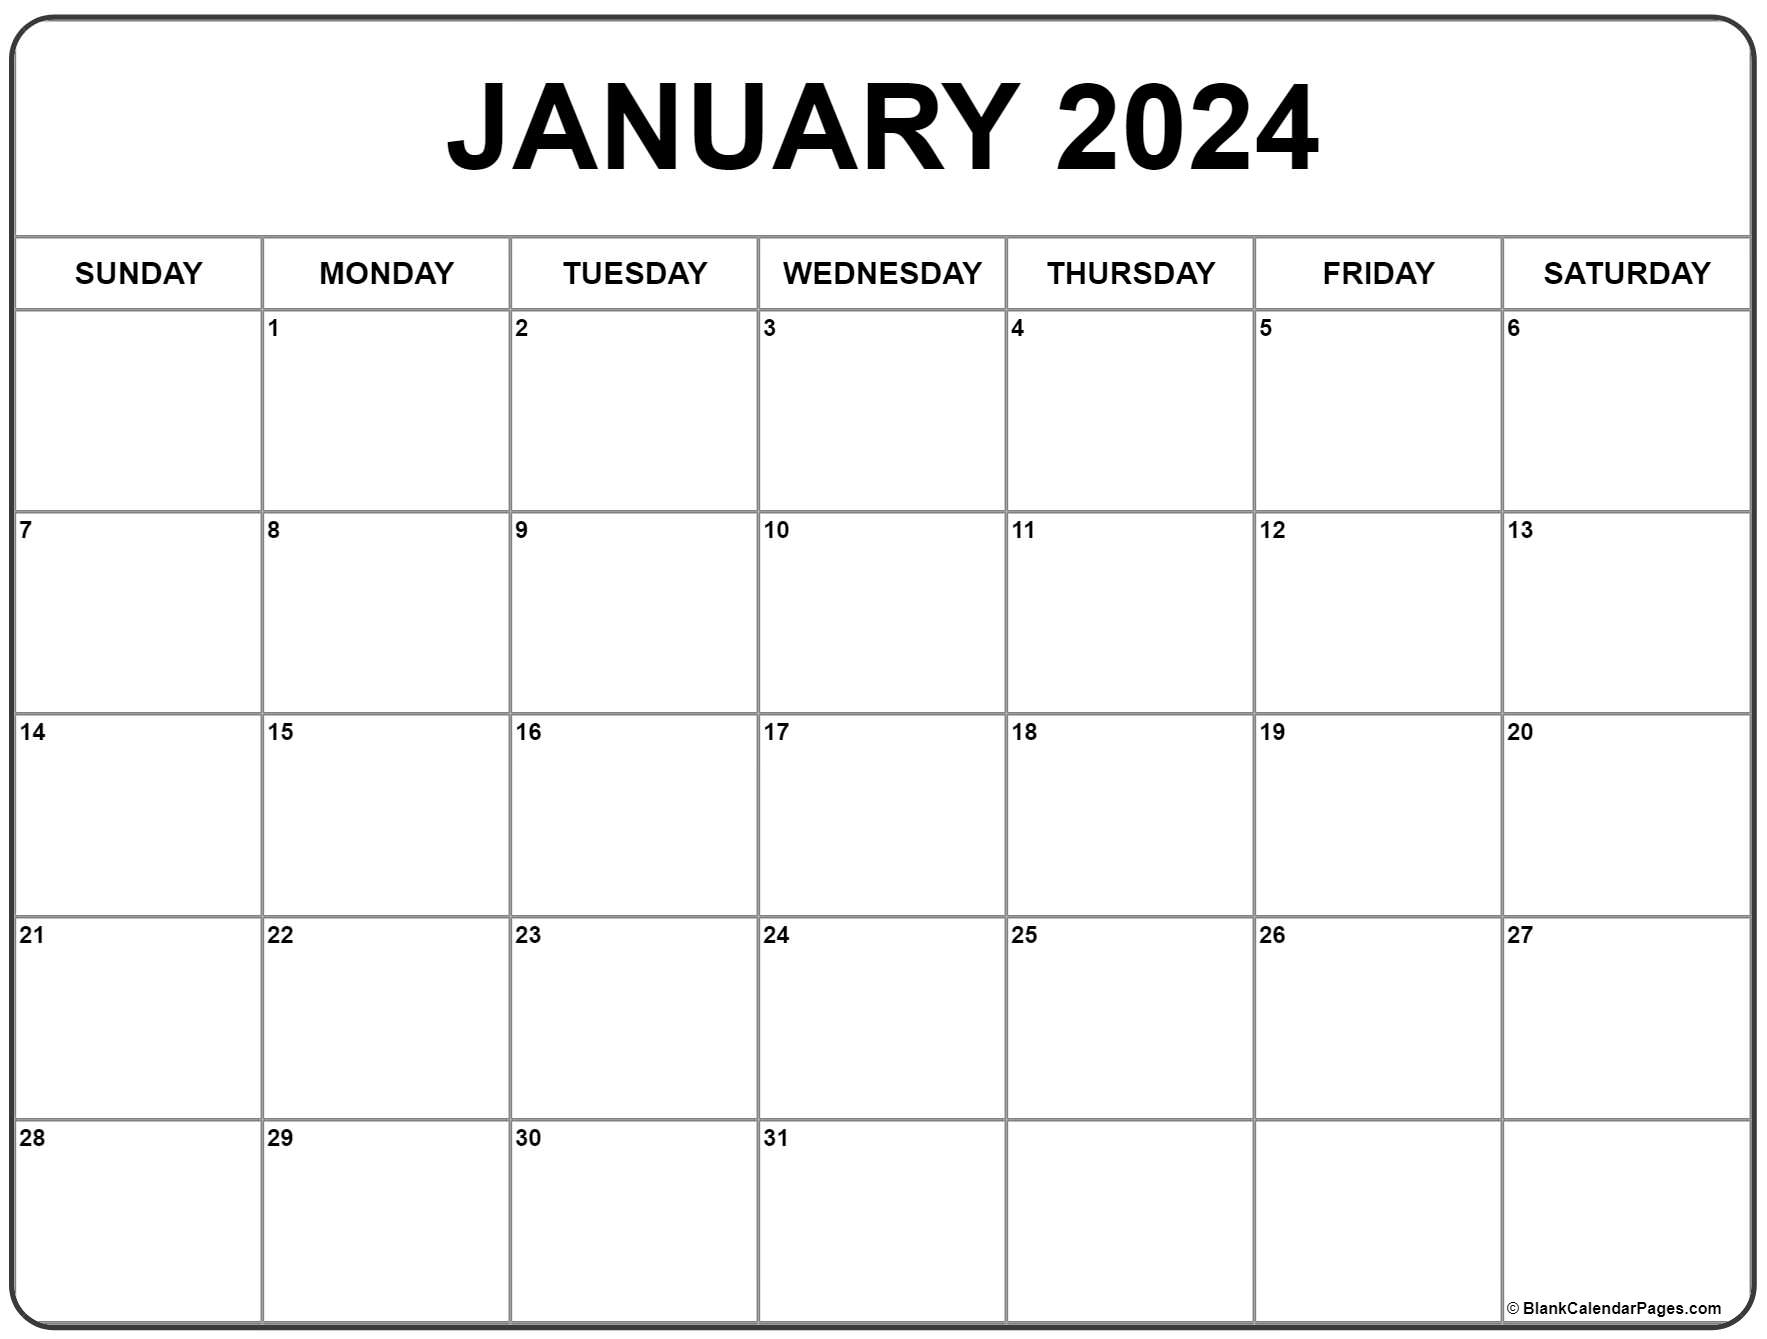 January 2024 Calendar | Free Printable Calendar | Free Printable Calendar 2024 Jan